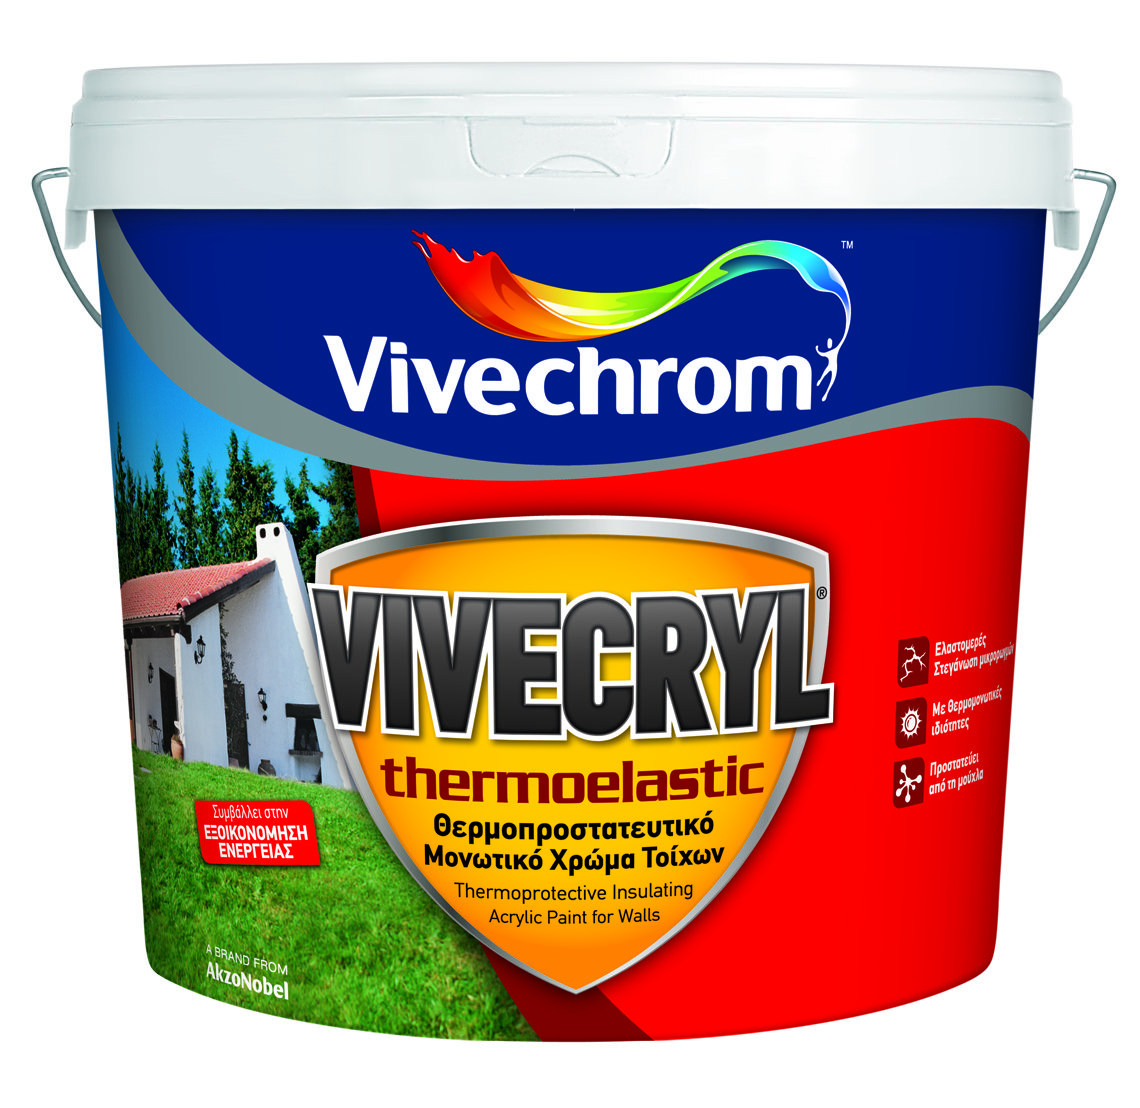 Vivechrom Vivecry Θερμοπροστατευτικό Οικολογικό Ακρυλική Βάση Matt Finish Mixing D 3L